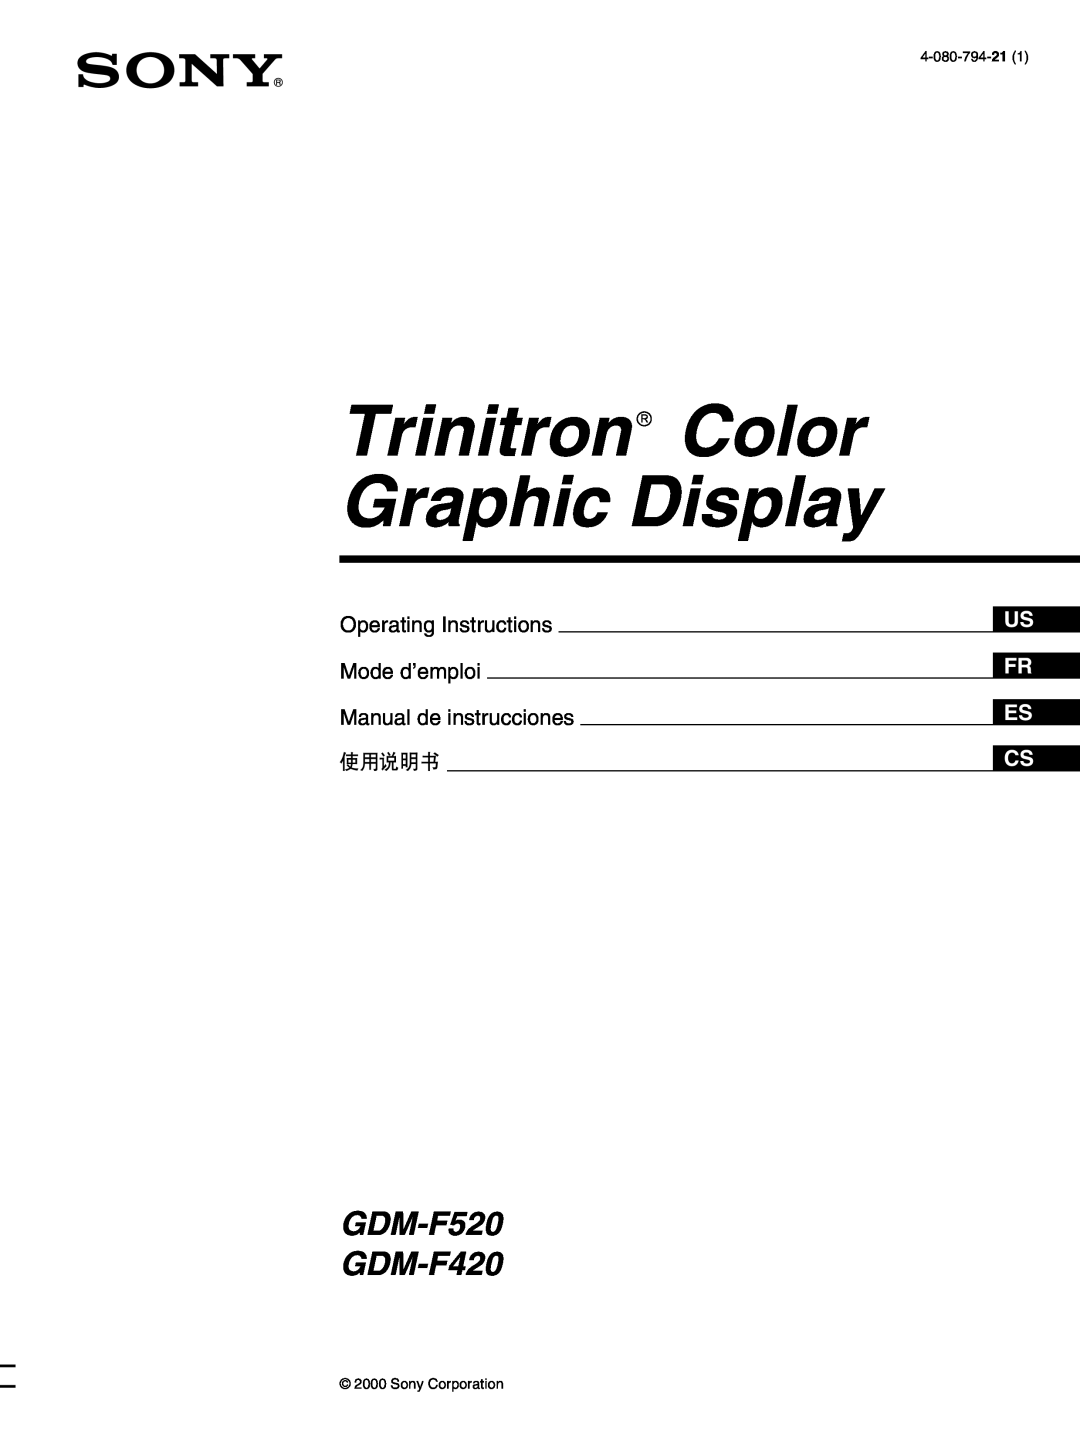 Sony GDM-F520 manual Operating Instructions, Mode d’emploi, Manual de instrucciones, Trinitronâ Color Graphic Display 